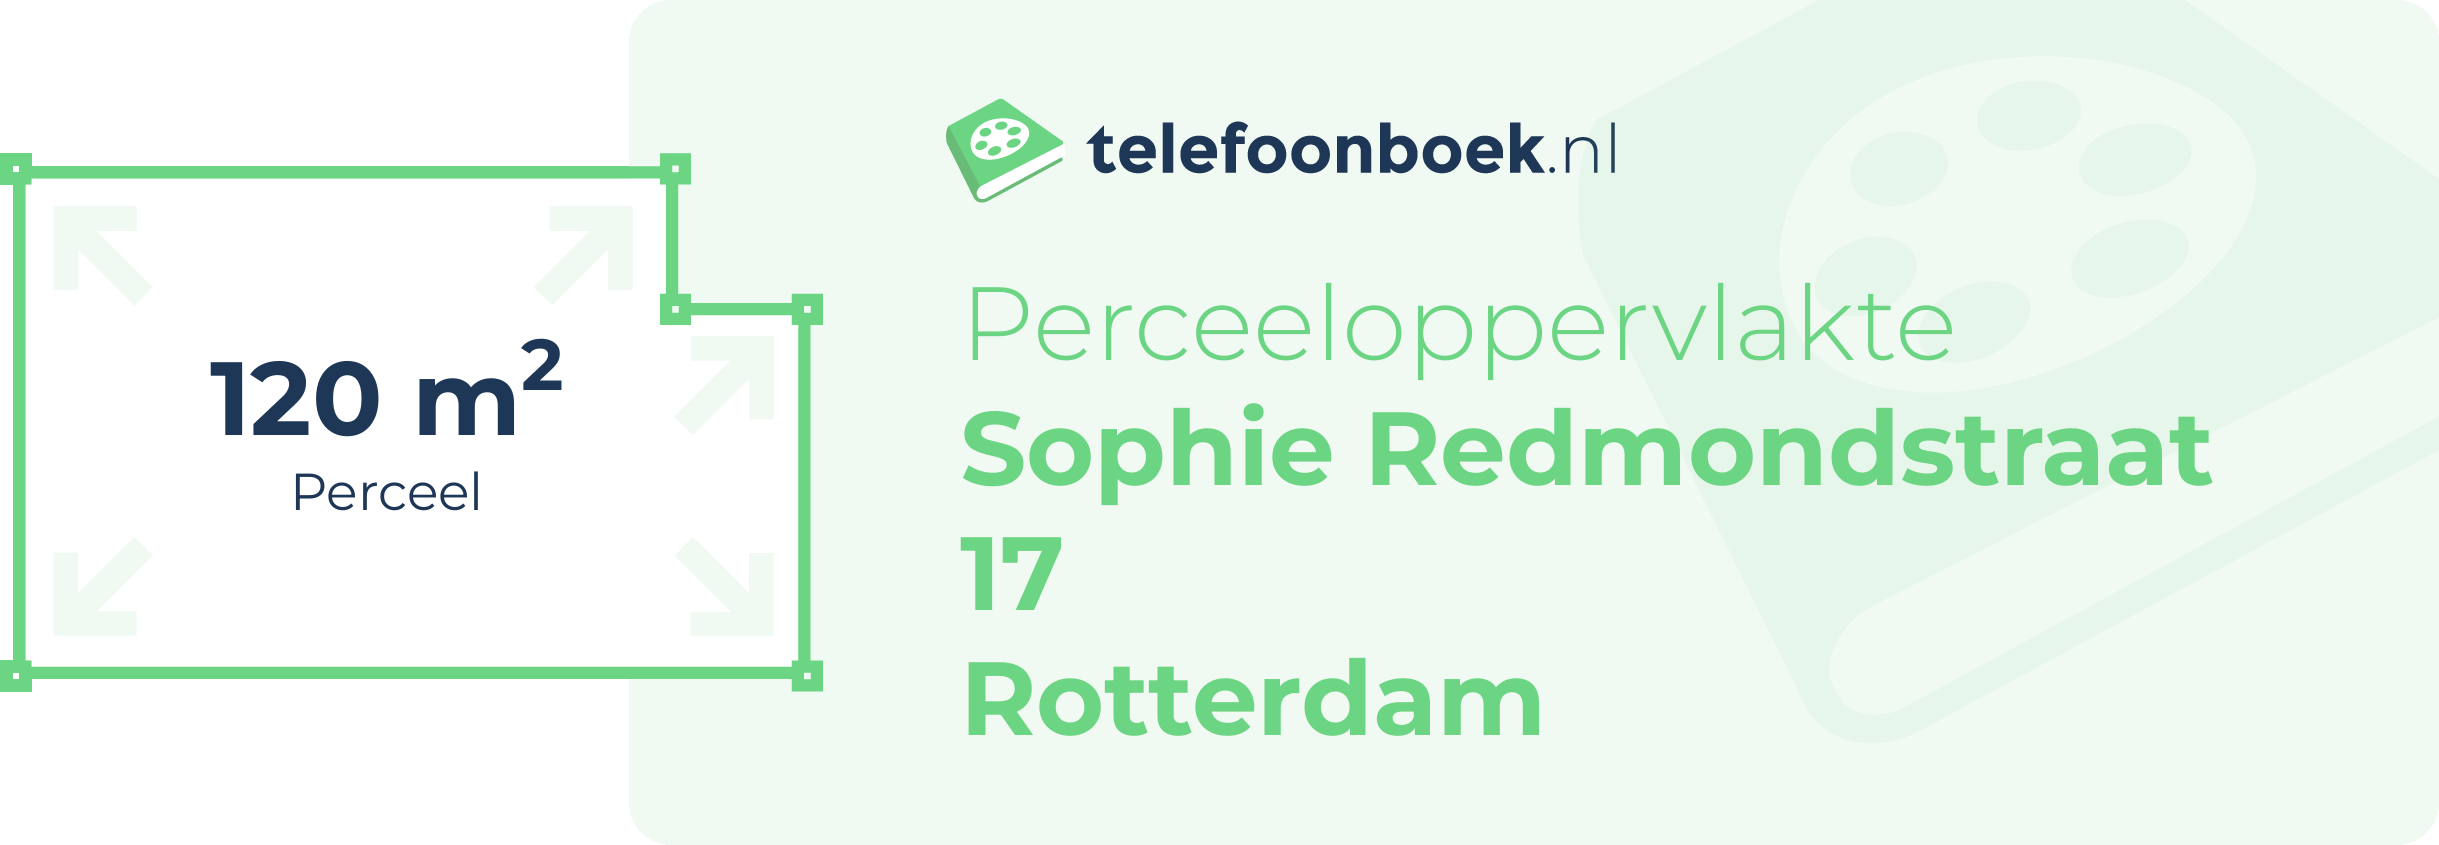 Perceeloppervlakte Sophie Redmondstraat 17 Rotterdam